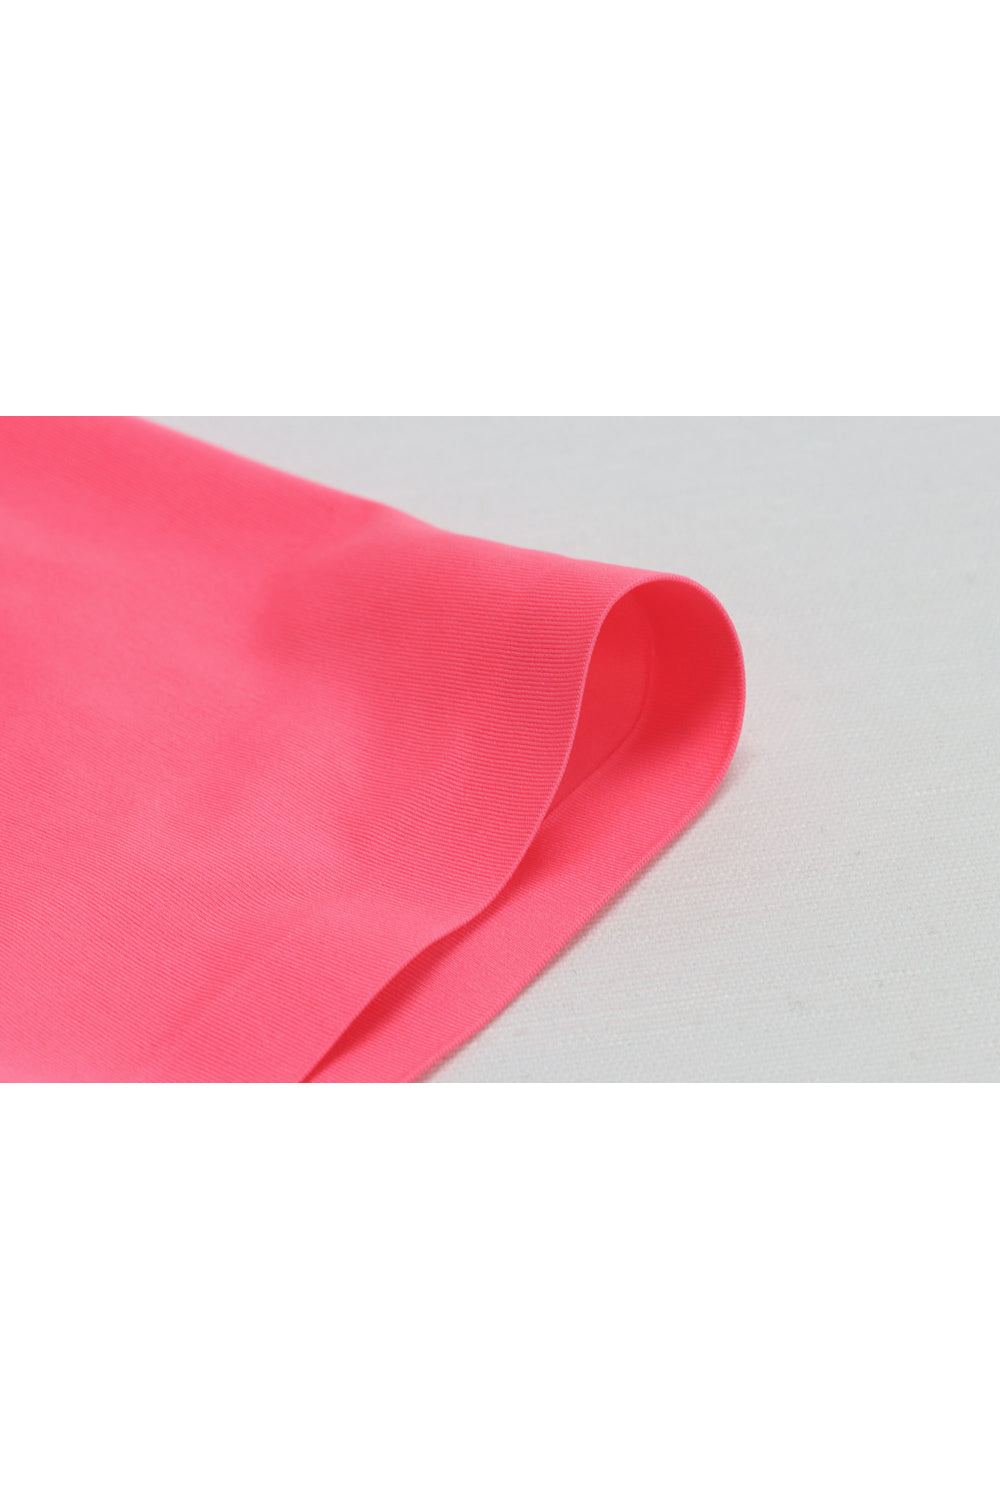 Sundried Sport Pianura Men's Pink Short Sleeve Cycle Jersey Short Sleeve Jersey Activewear